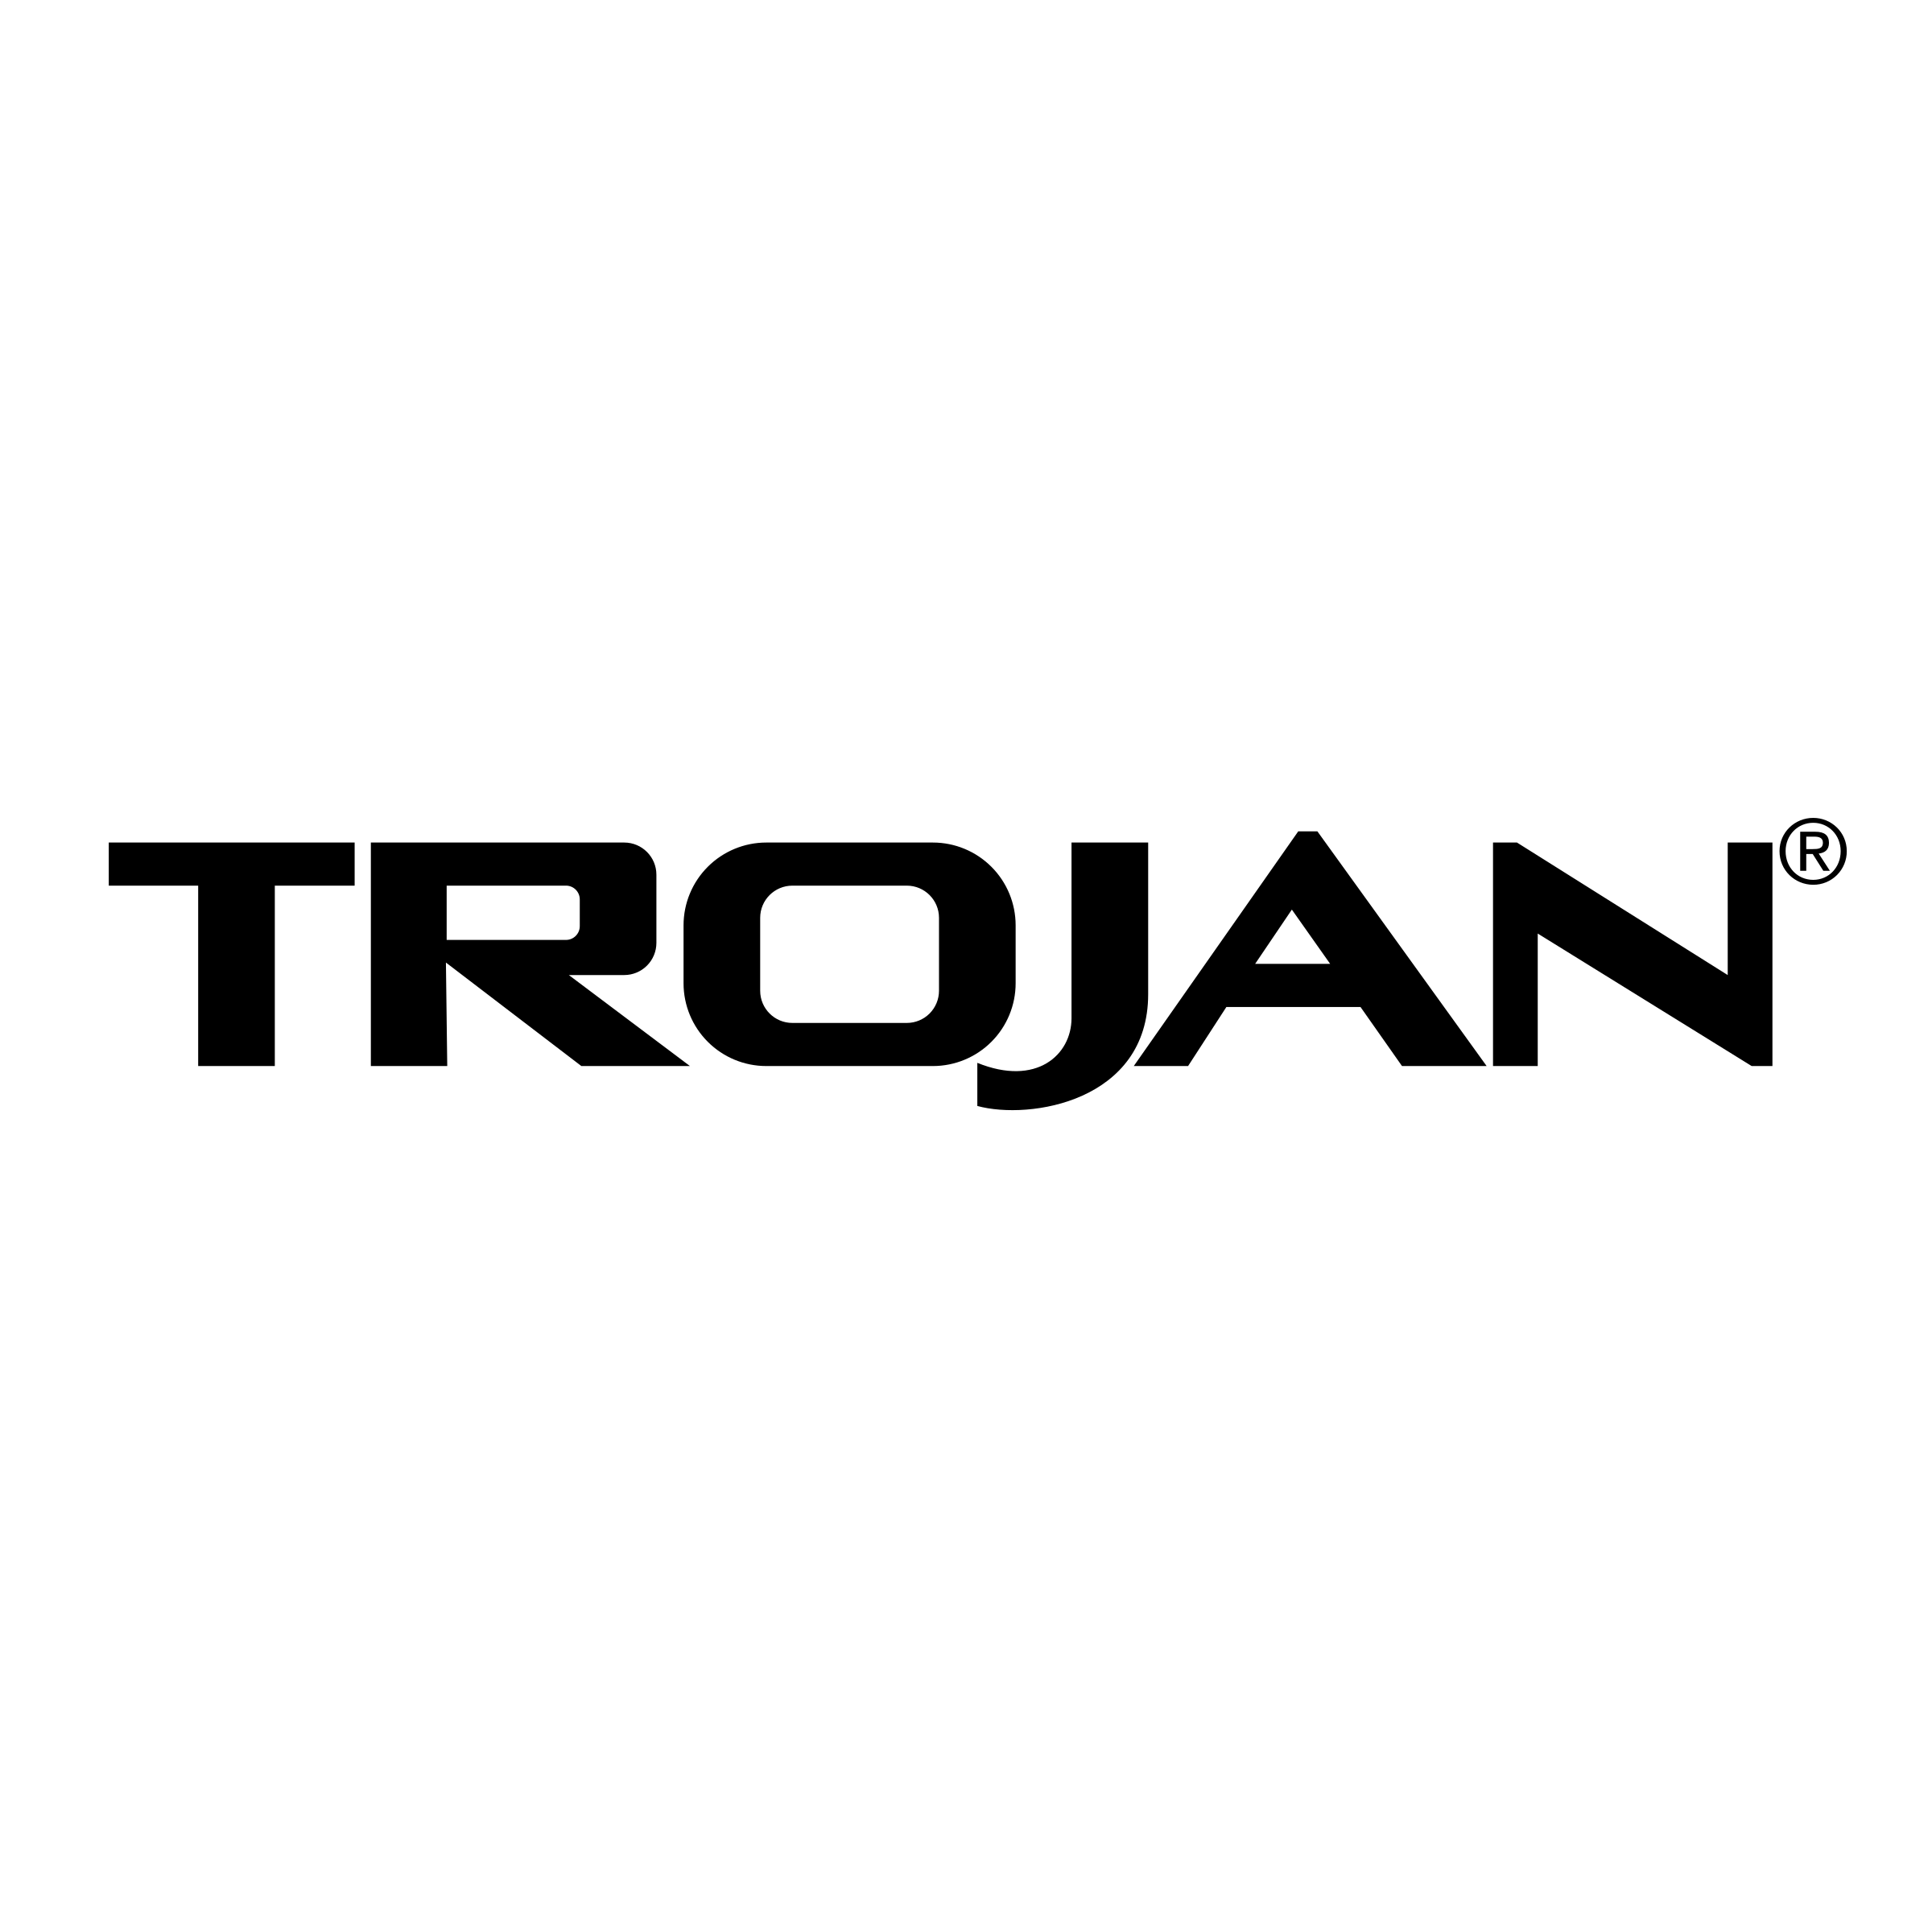 Trogan Logo - Trojan Logo PNG Transparent & SVG Vector - Freebie Supply